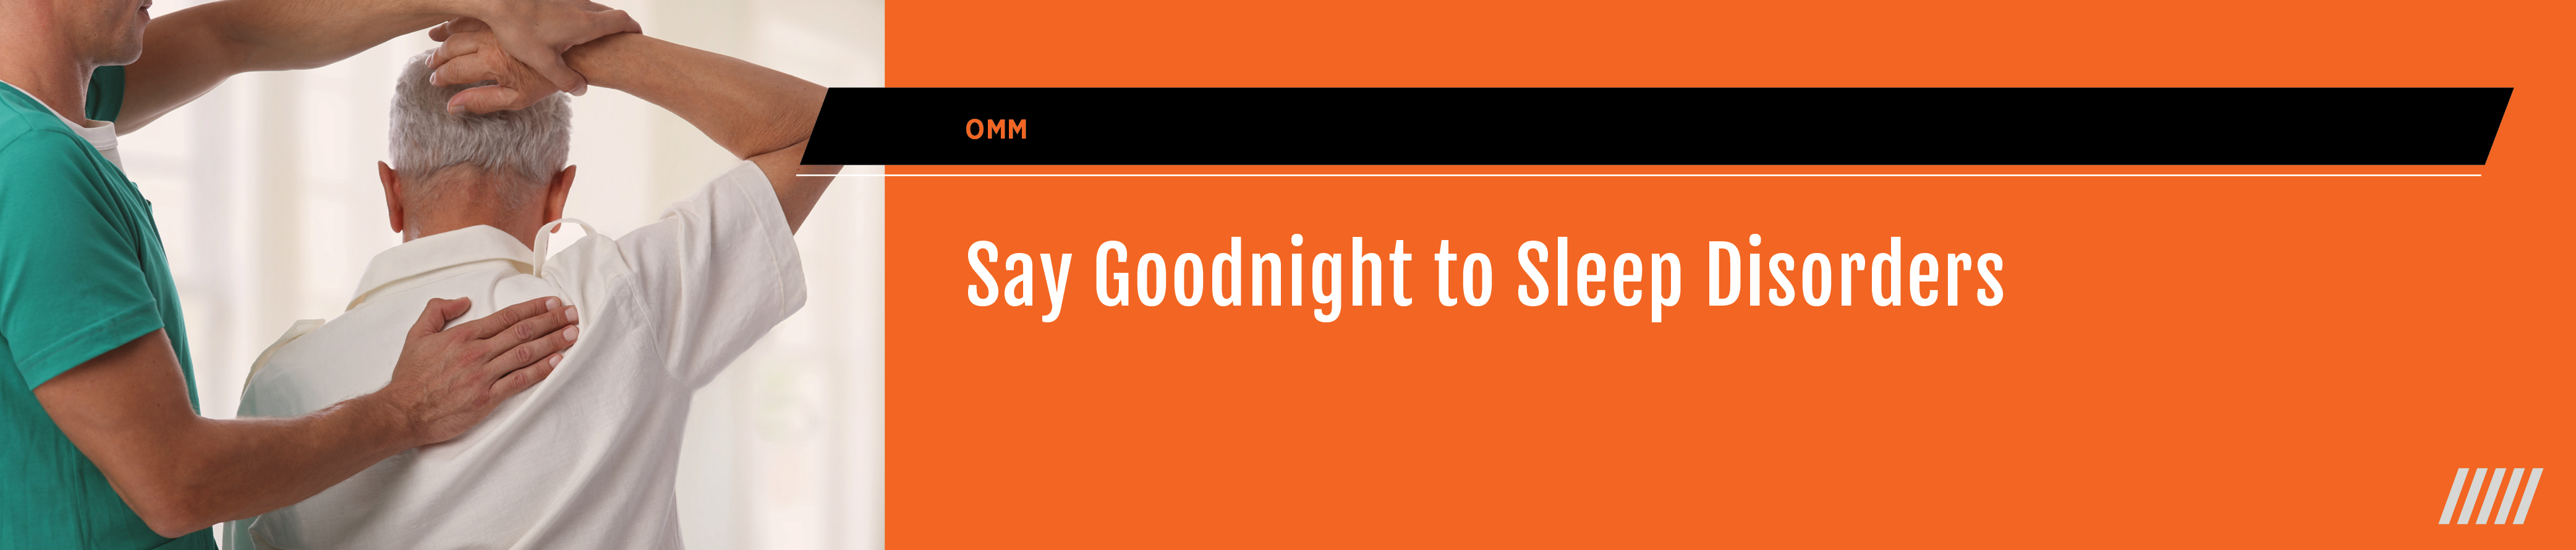 Say Goodnight to Sleep Disorders Banner